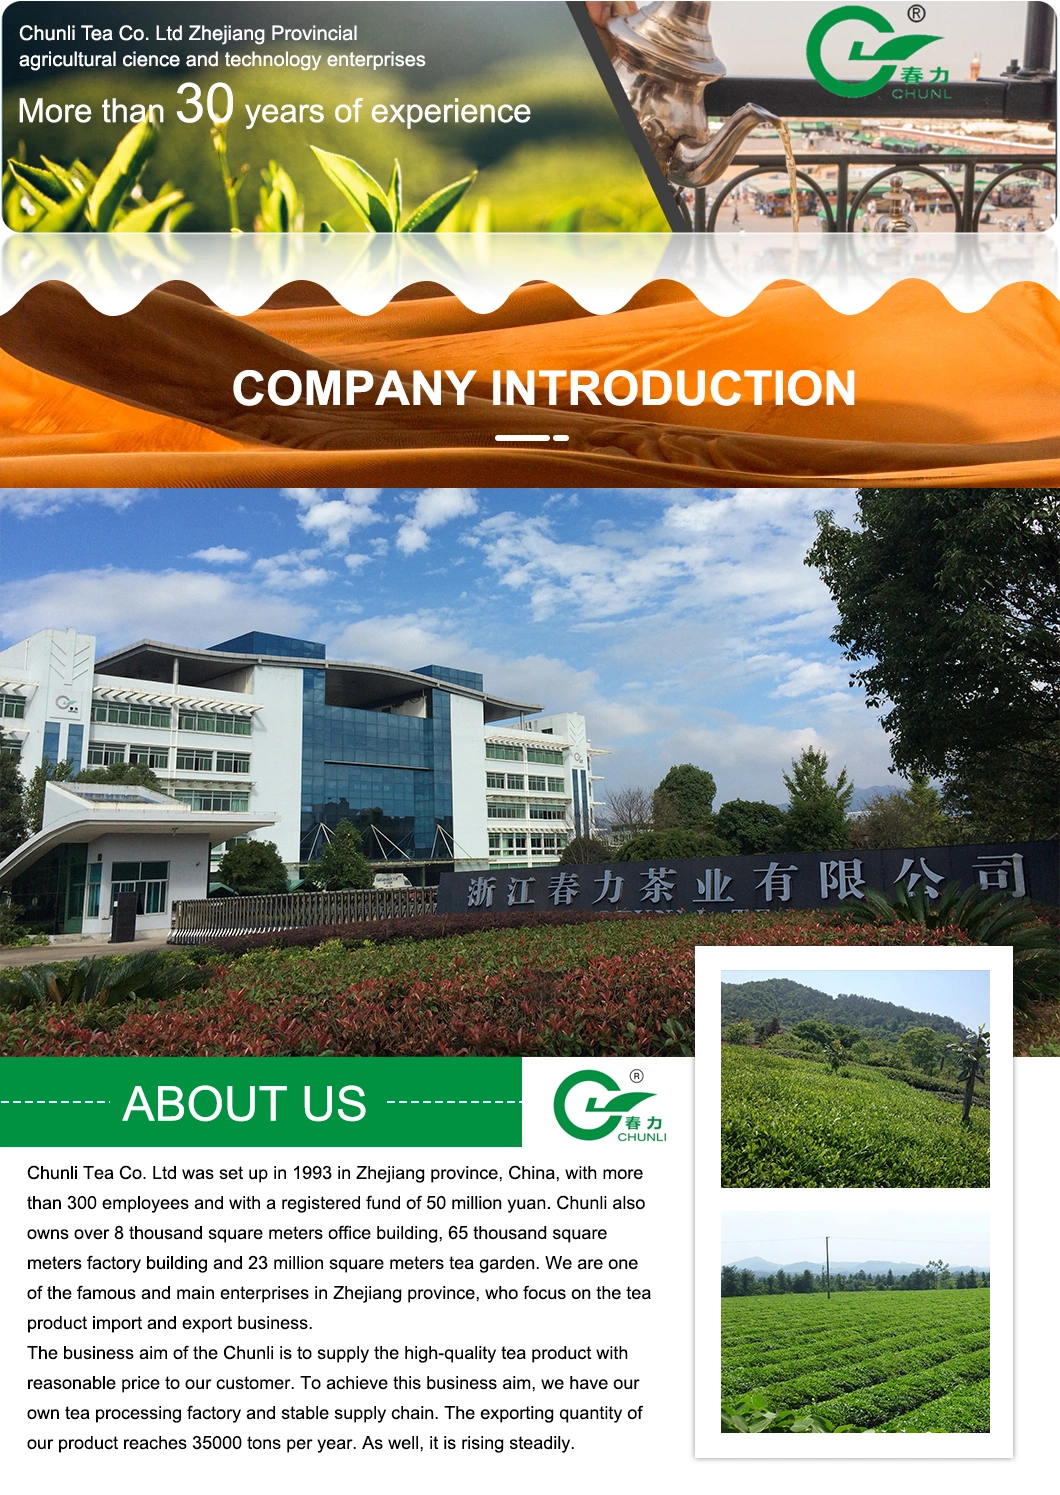 The Tea New Chinese National Green Tea Gunpowder 9775 Bags Packaging